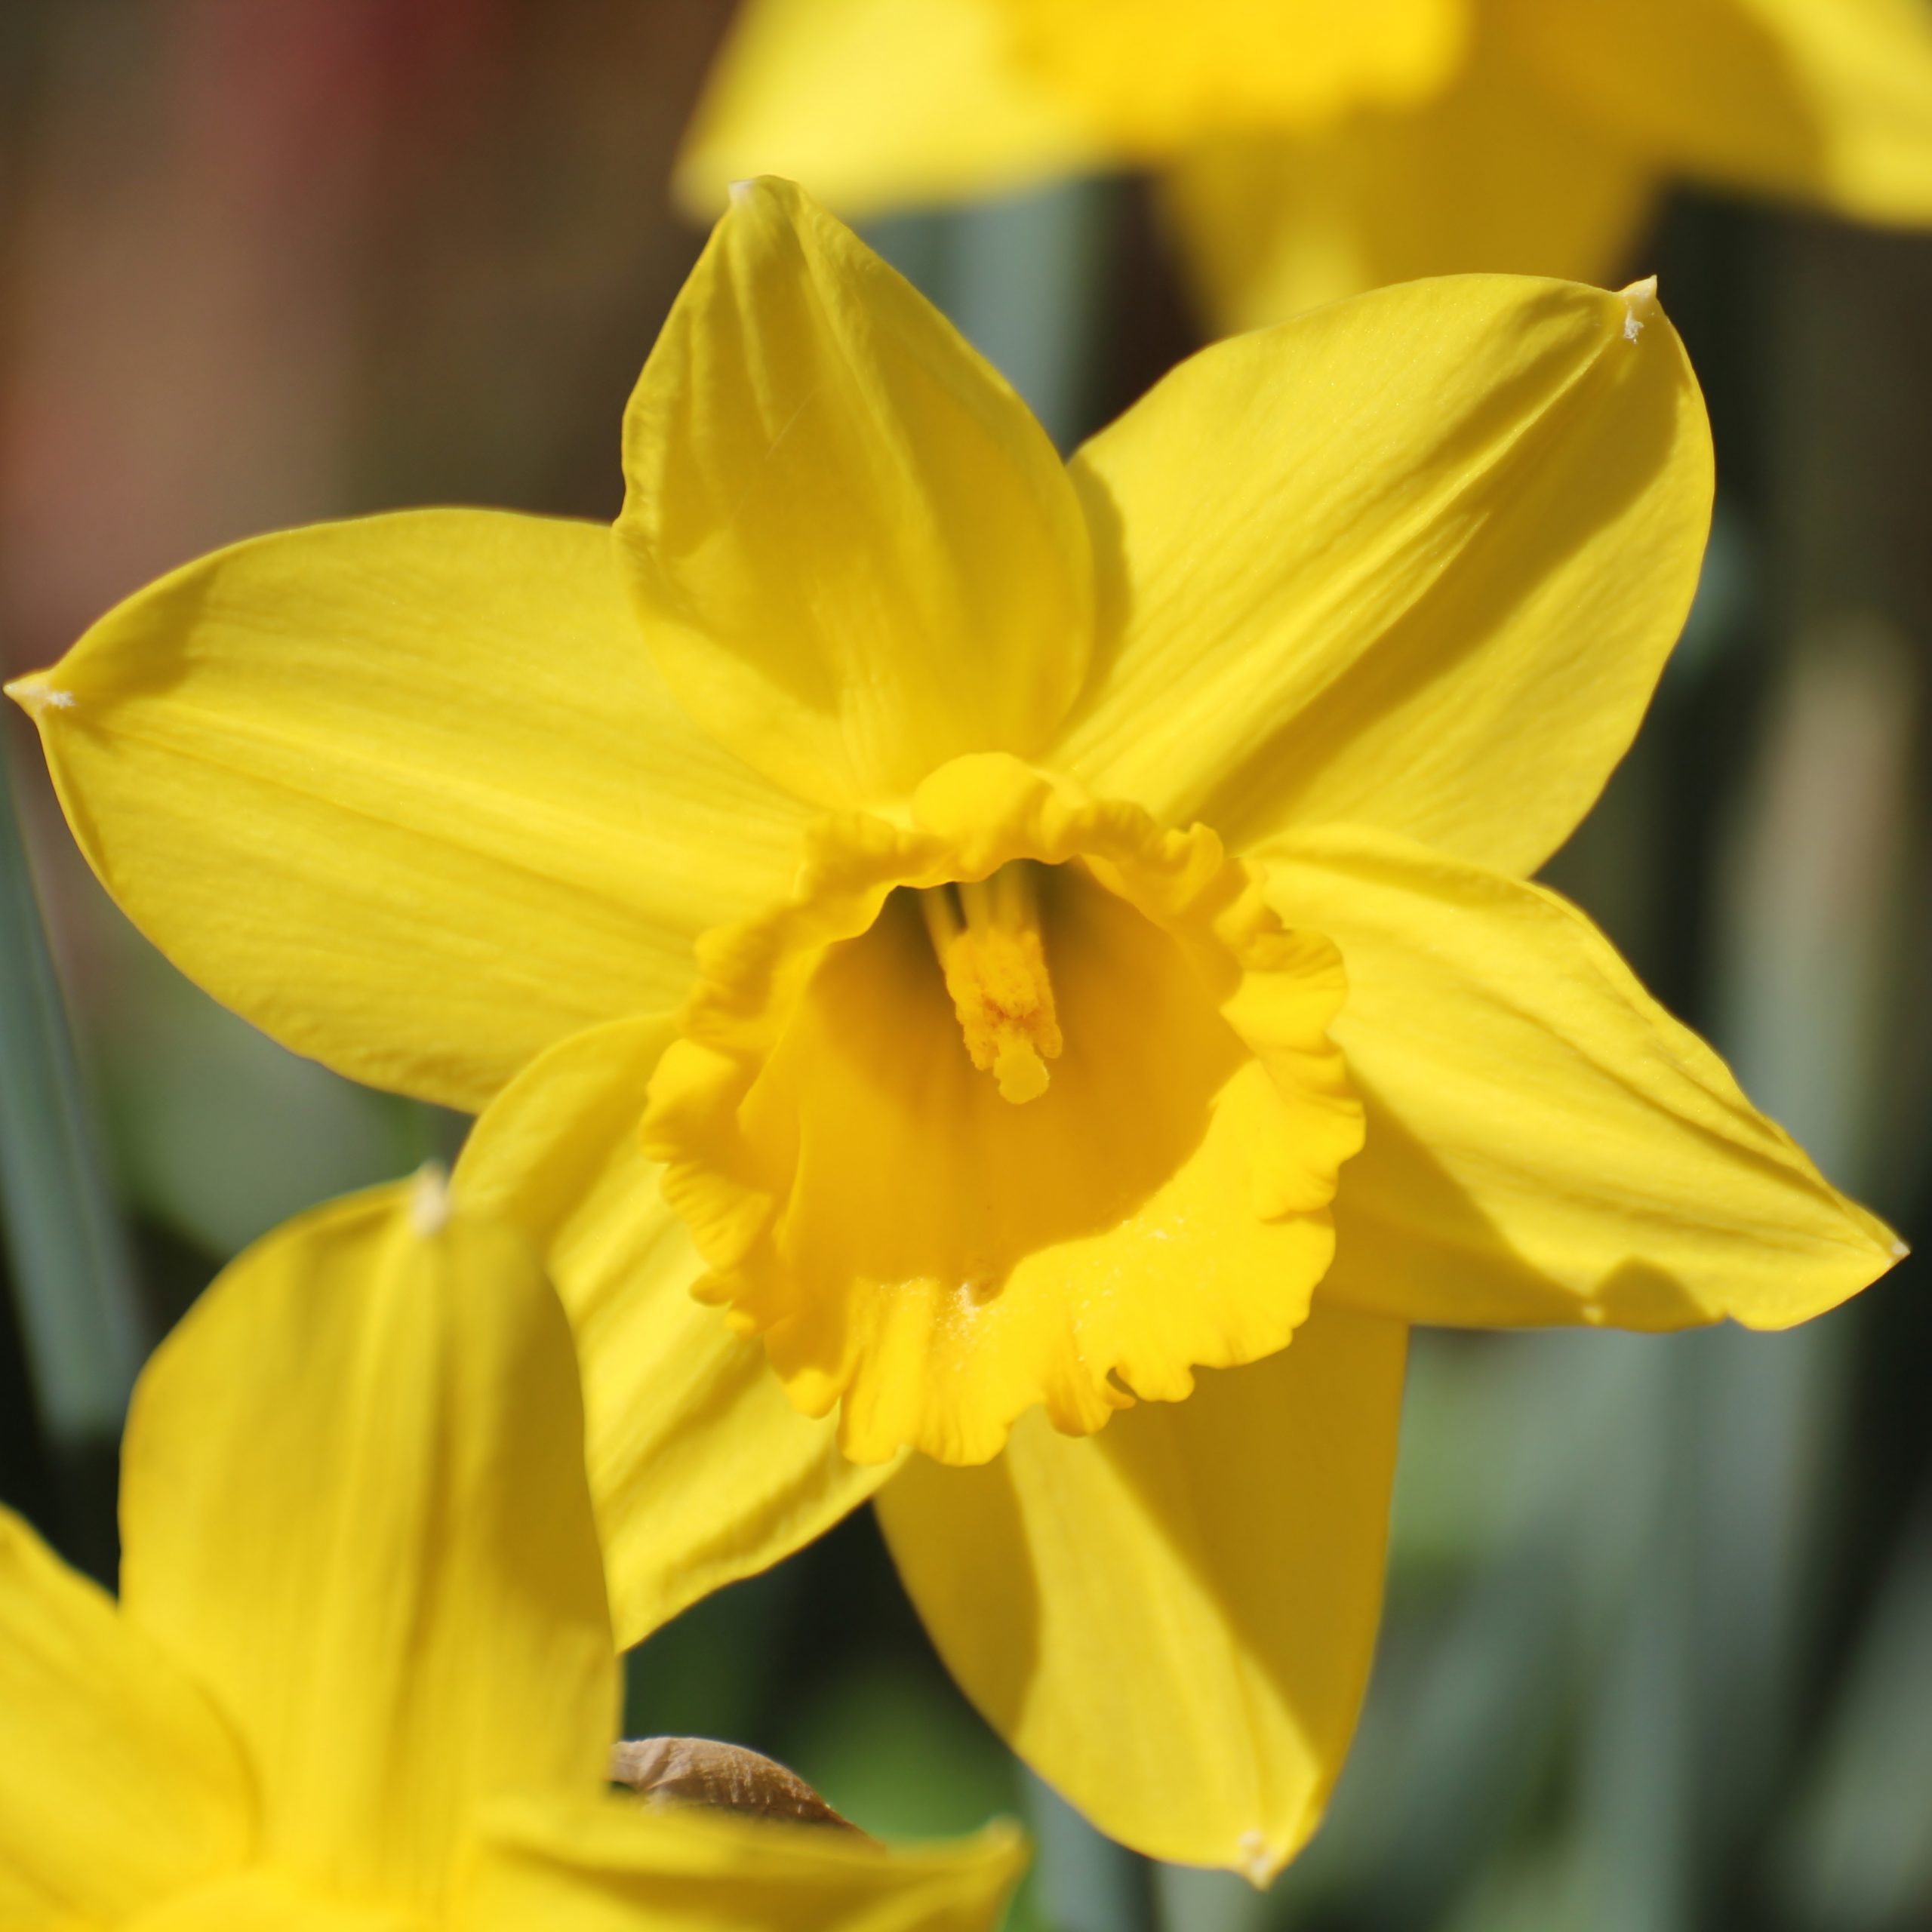 SLM | Daffodil Month - Celebrating 60 years!